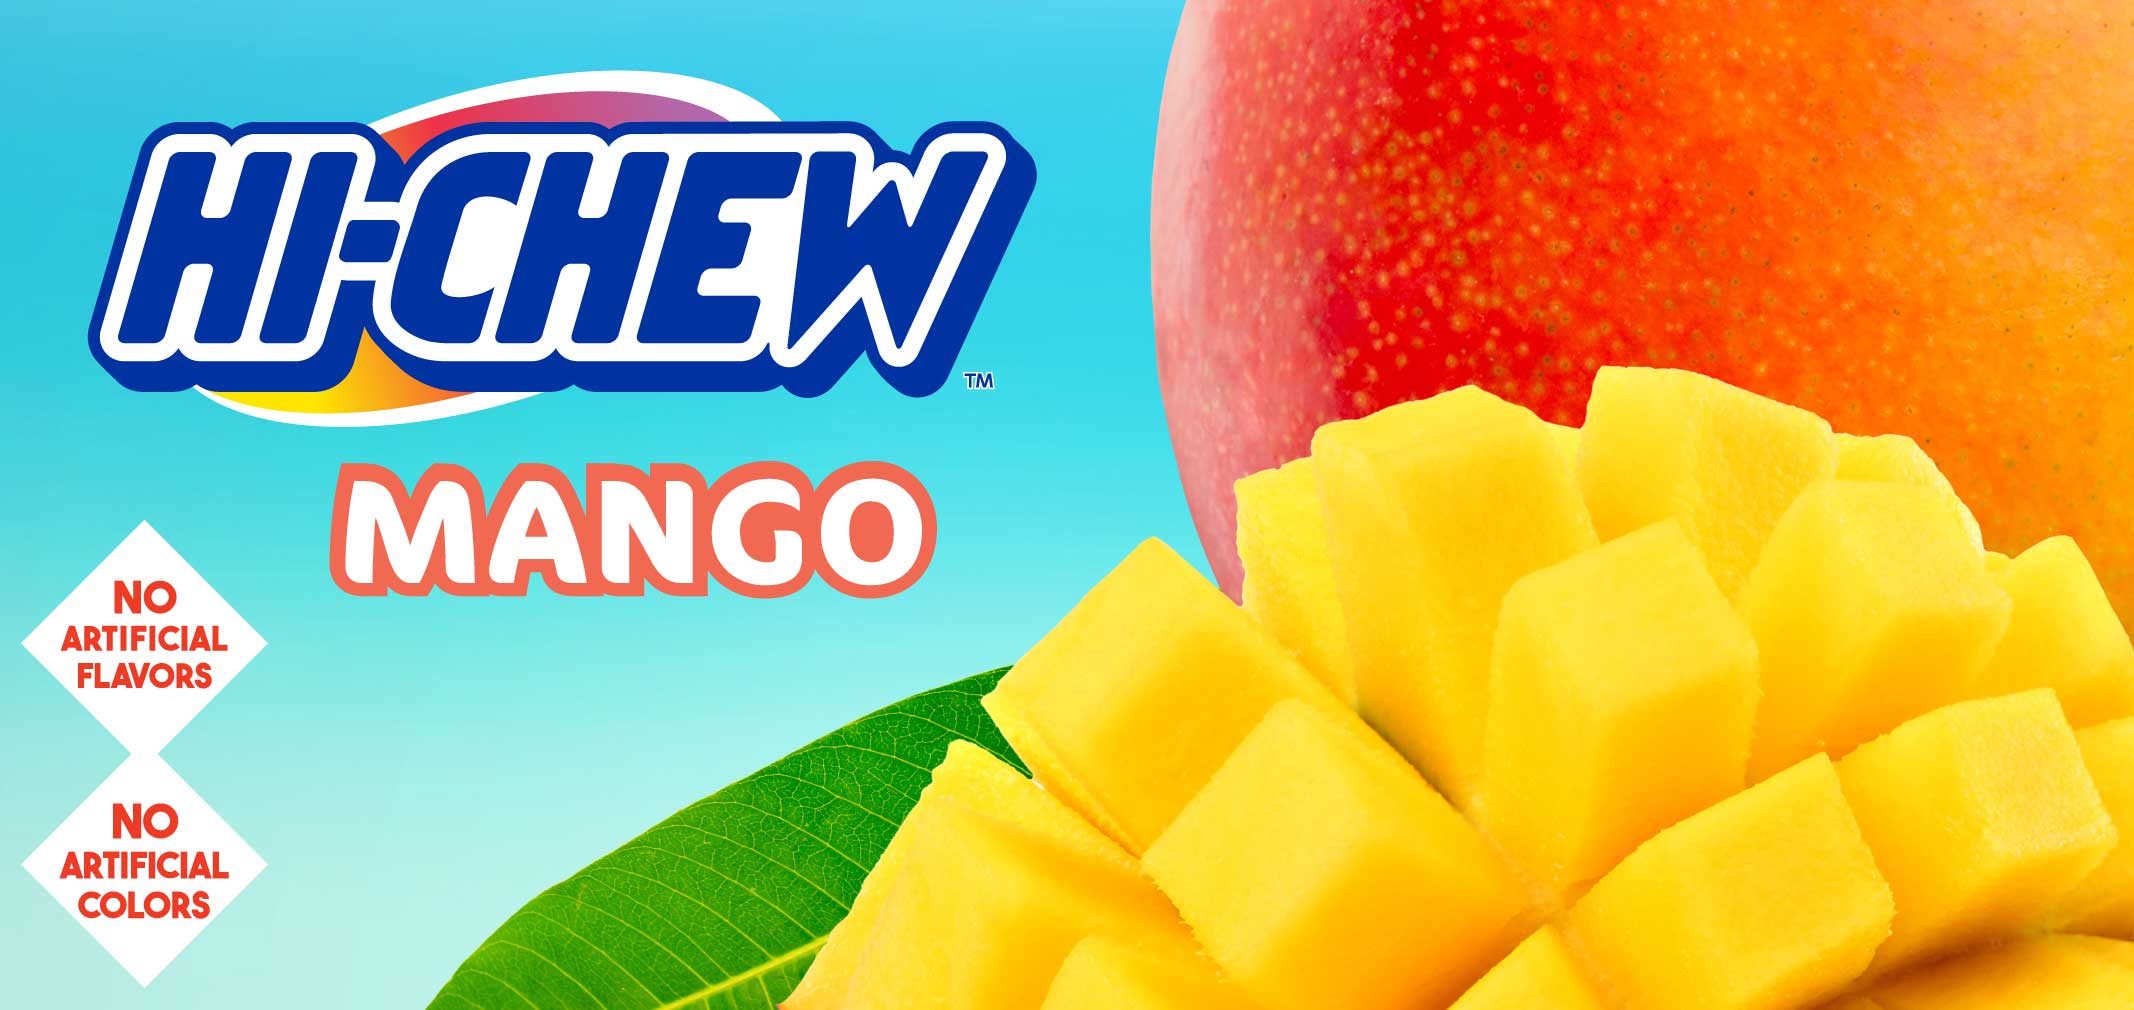 HI-CHEW™  Mango label image